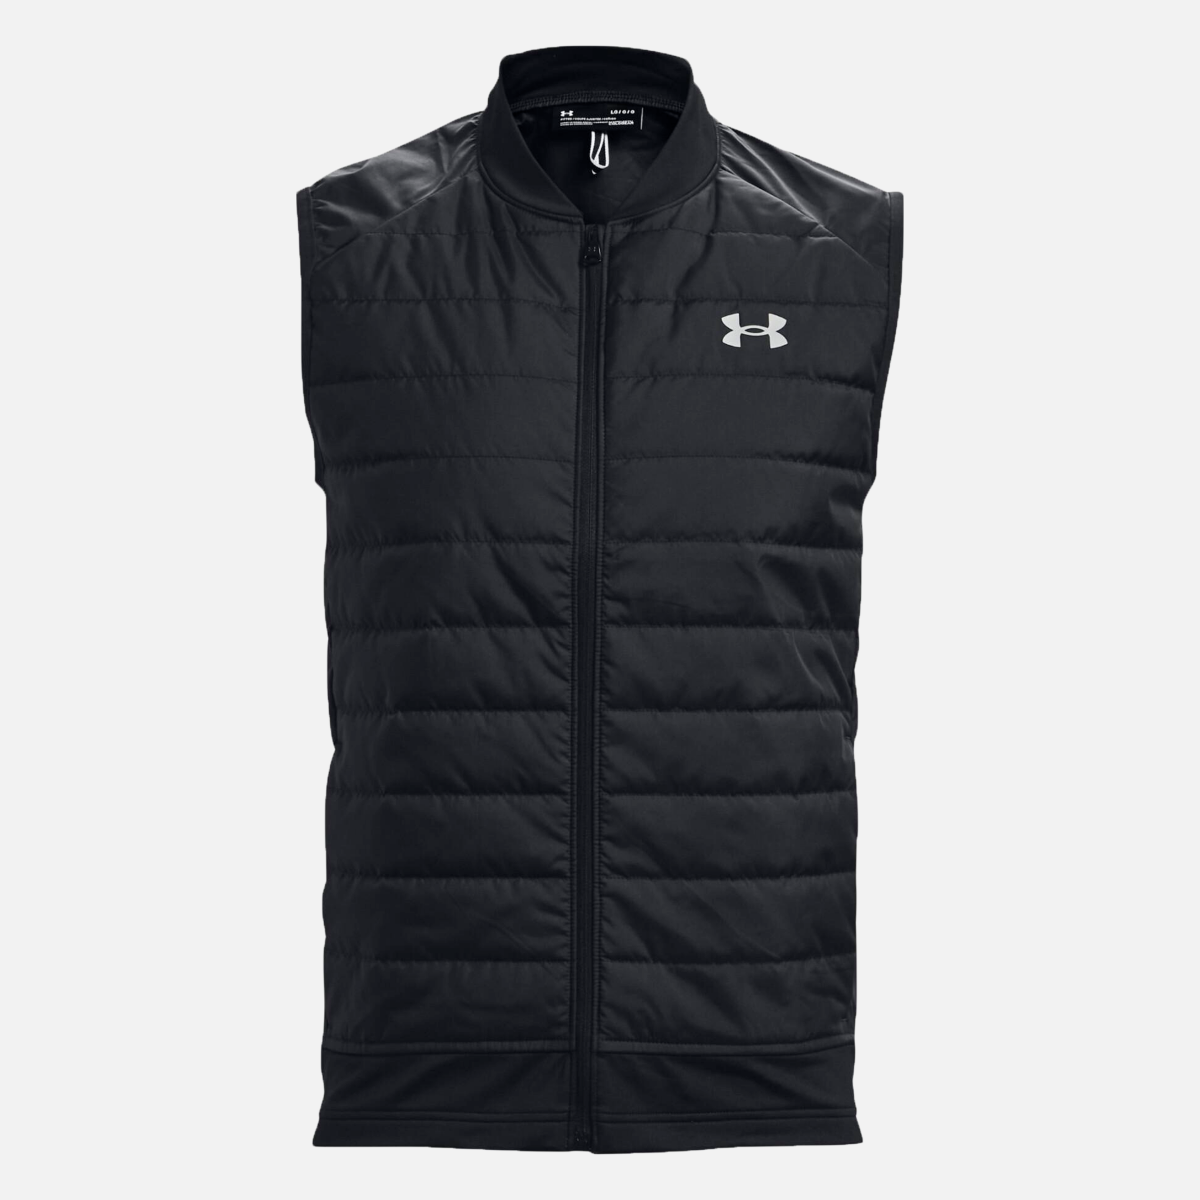 Under Armor Run Insulate sleeveless jacket - Black